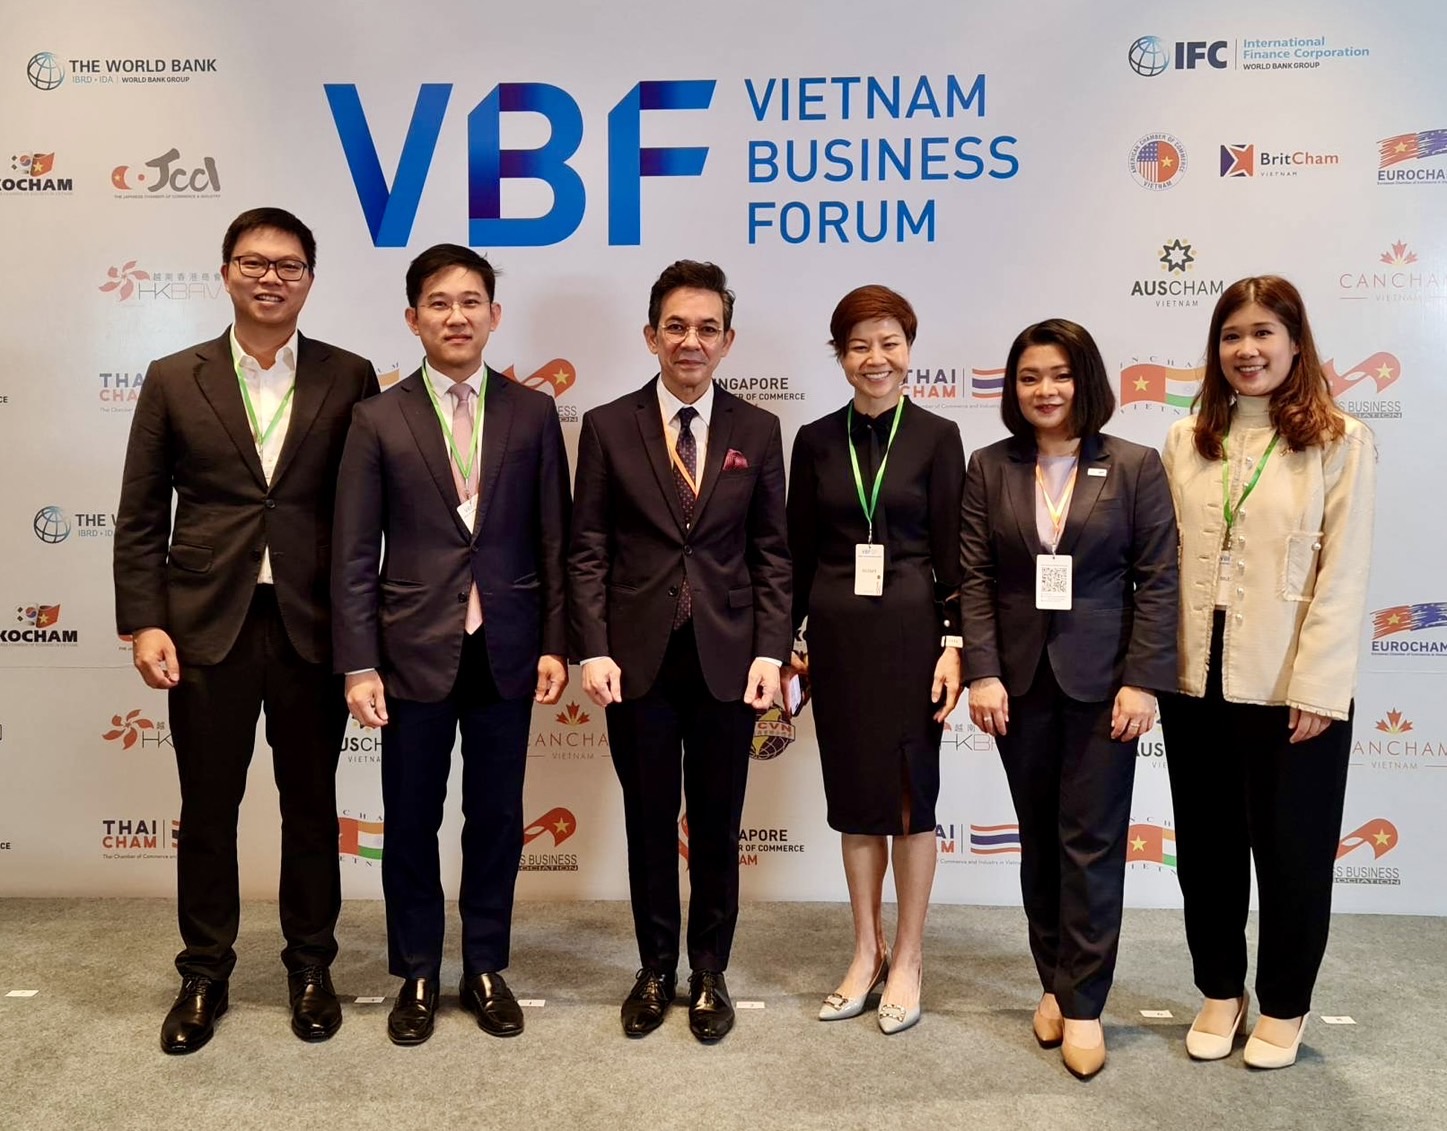 ThaiCham’s representatives, Thai Ambassador to Vietnam and members attended the Annual Vietnam Business Forum.